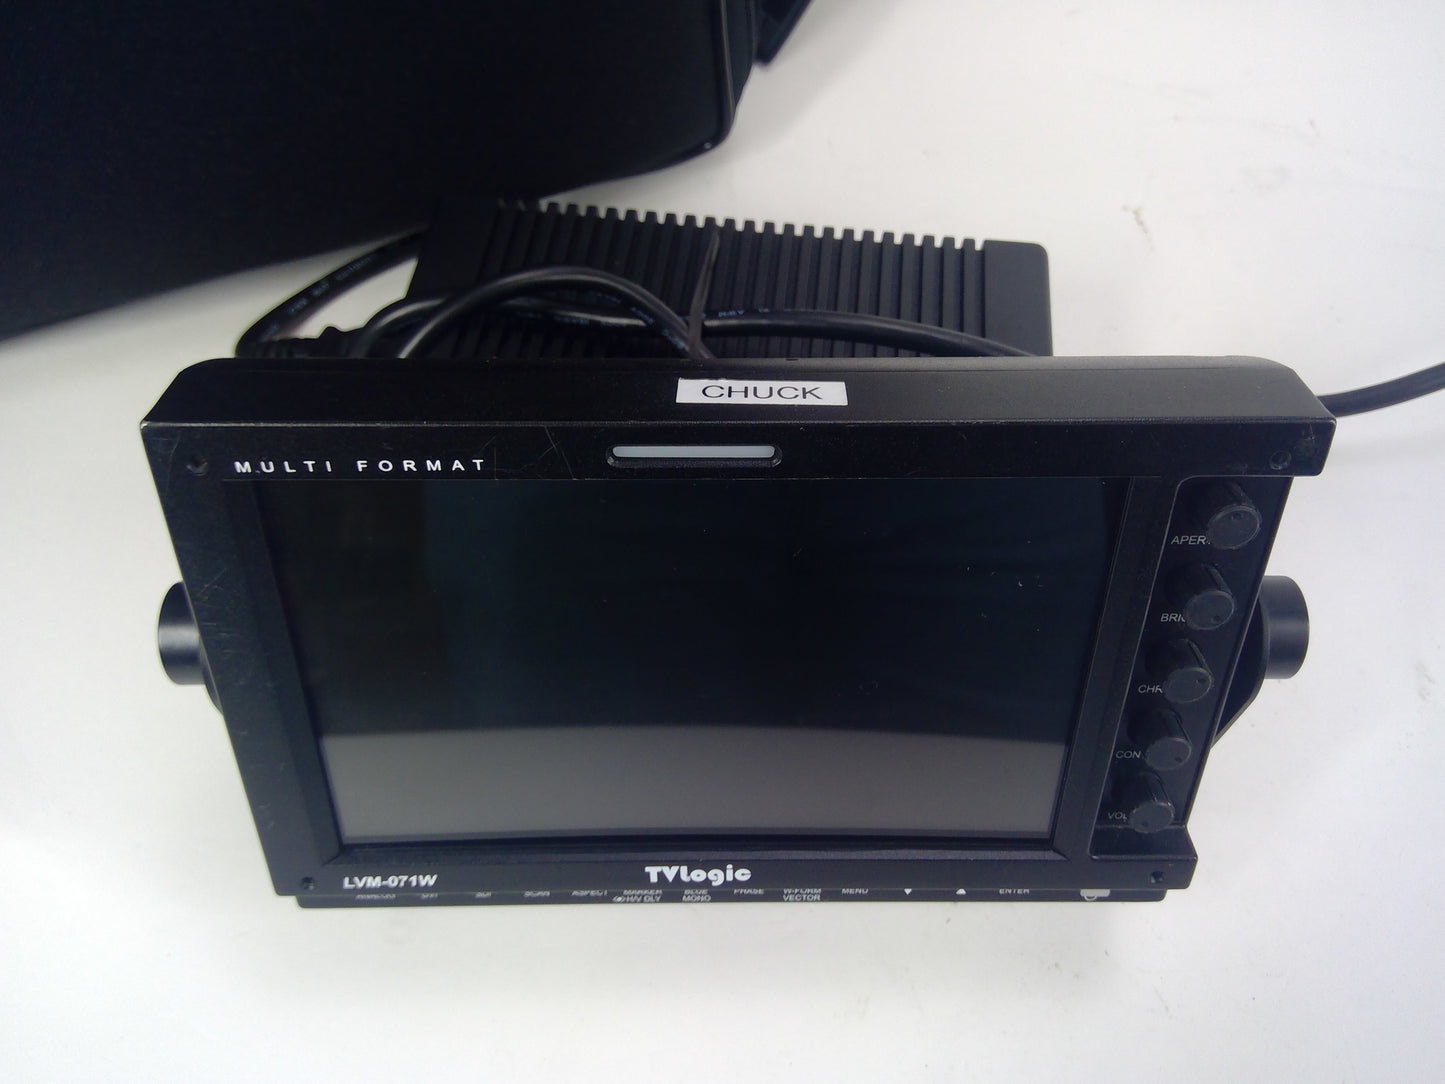 TVLogic 7" 1080p FHD LVM-071W Multi-Format LCD Monitor